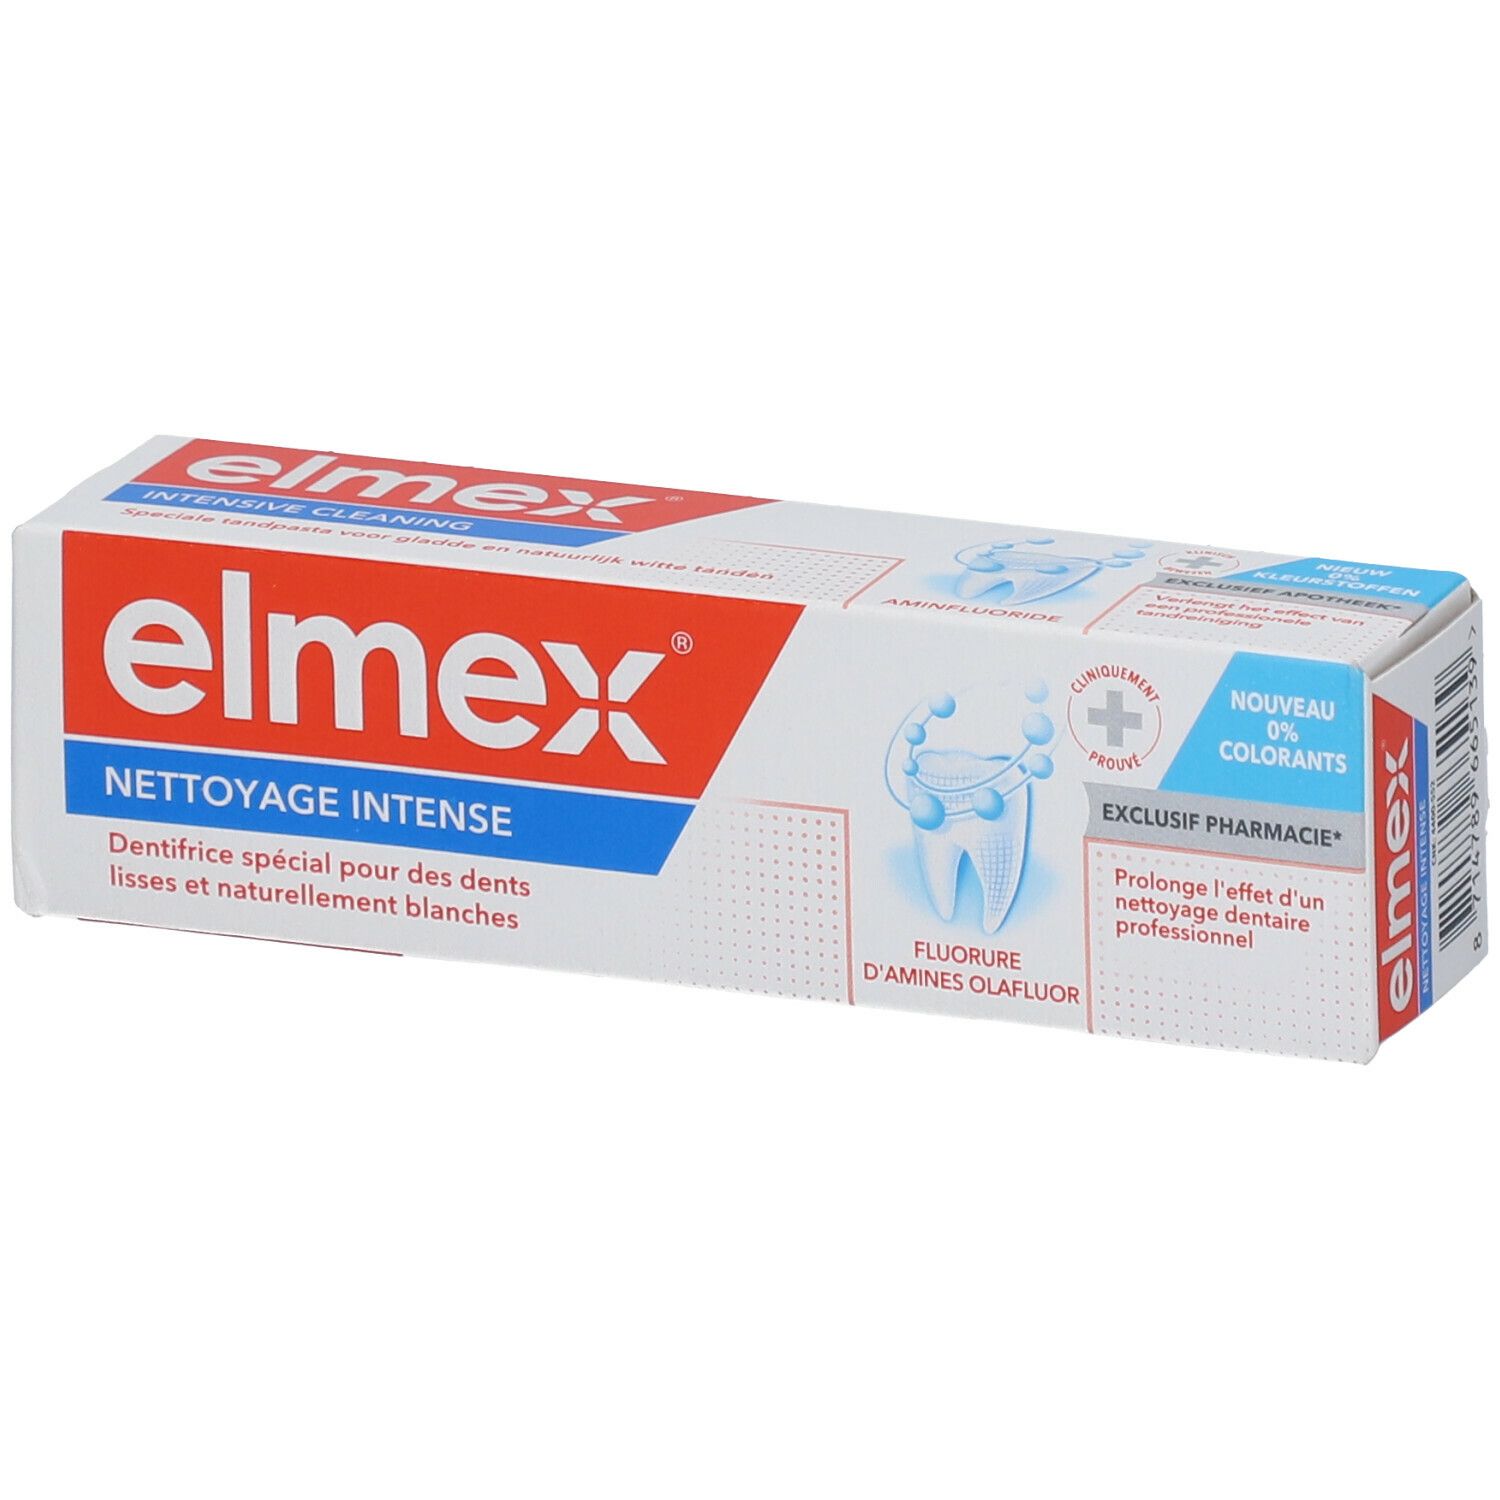 elmex® Dentifrice Nettoyage intense